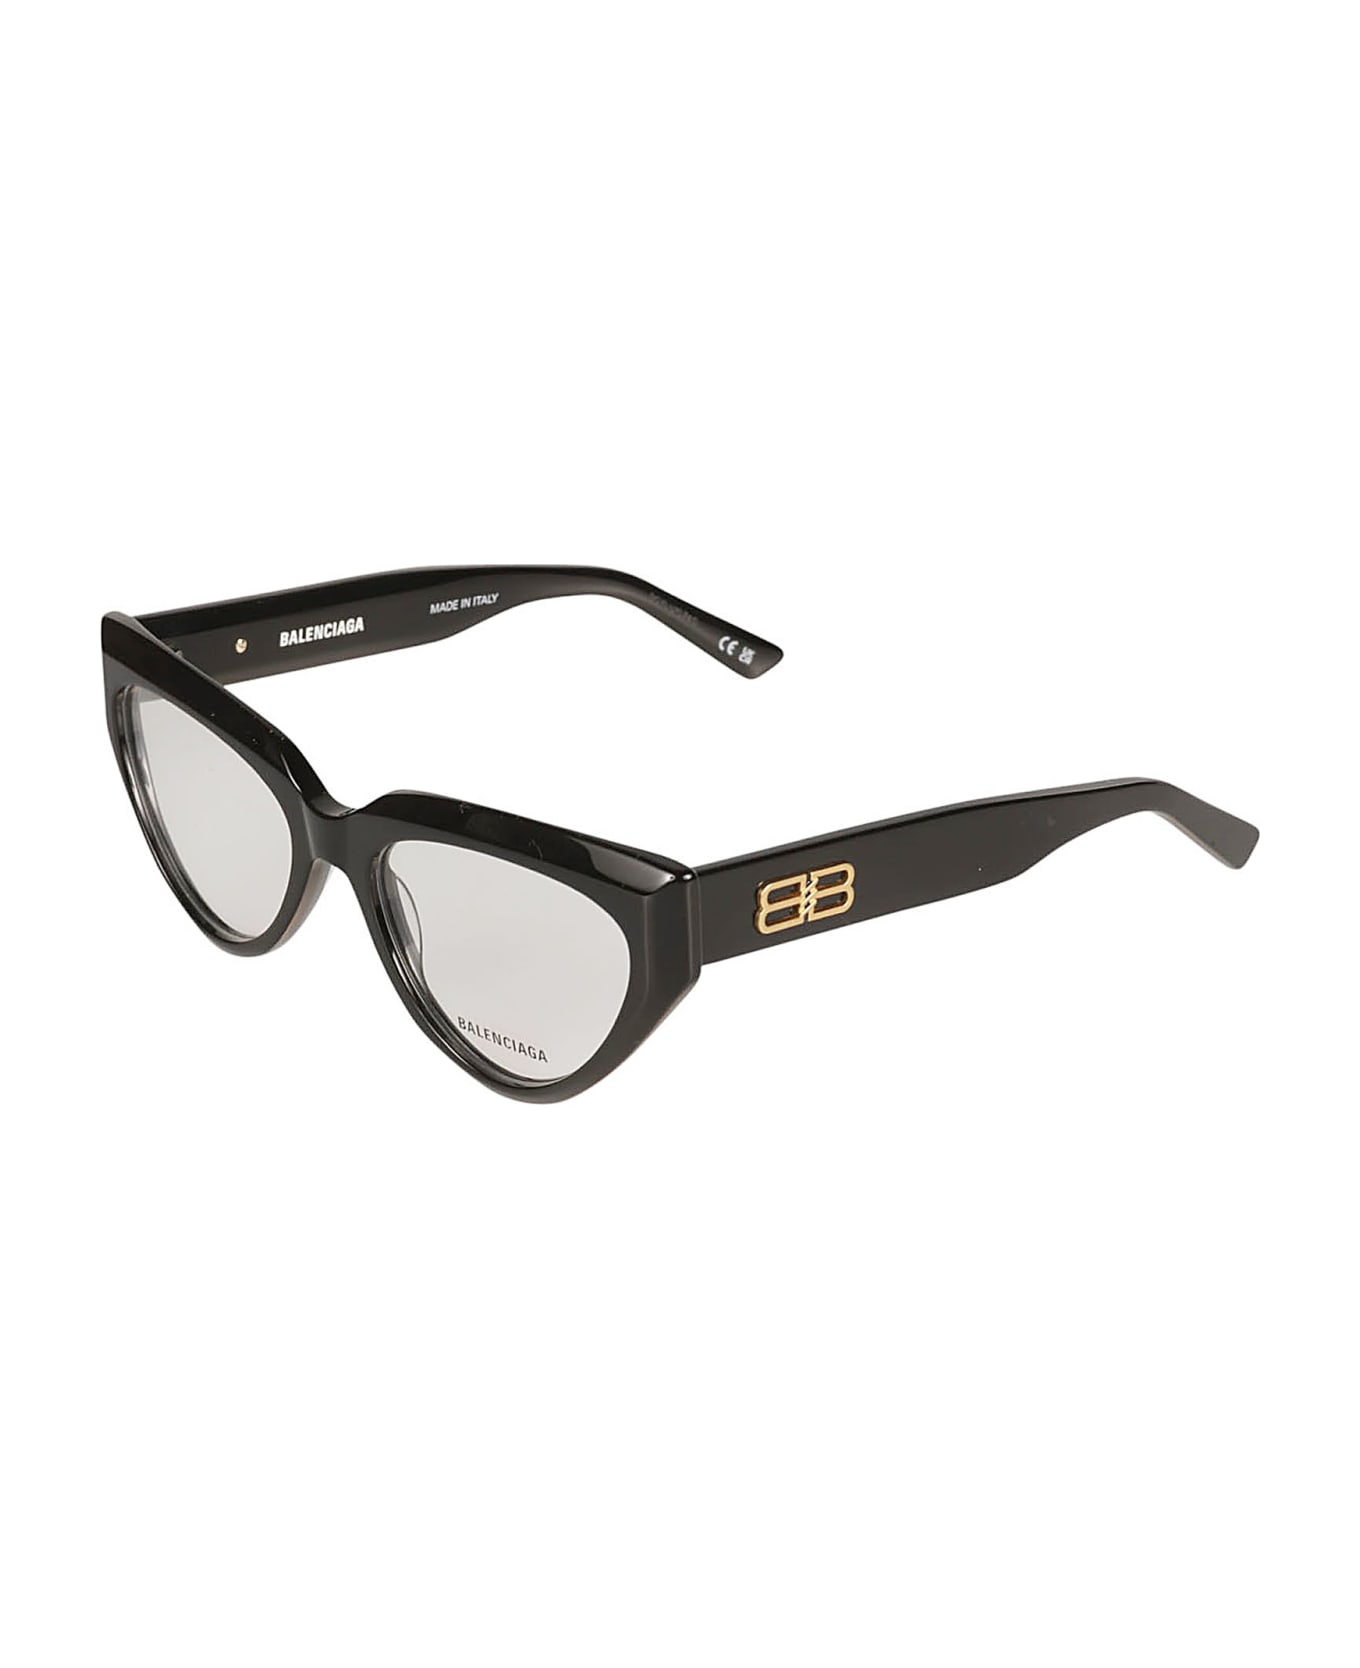 Balenciaga Eyewear Bb Plaque Cat Eye Frame Glasses - Black/Transparent